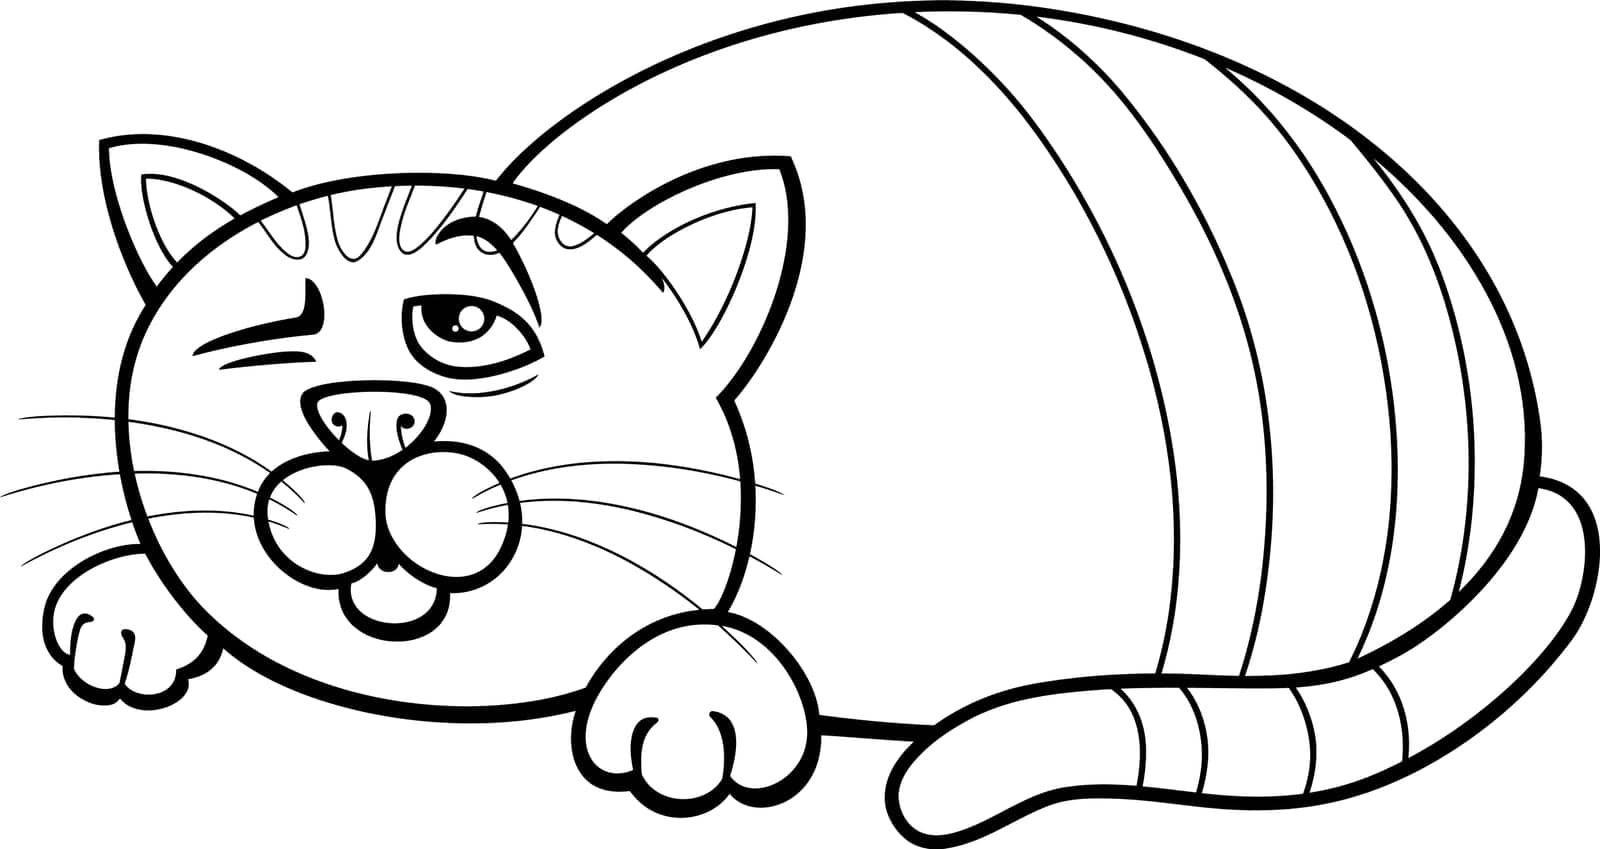 cartoon sleepy cat comic animal character coloring page by izakowski